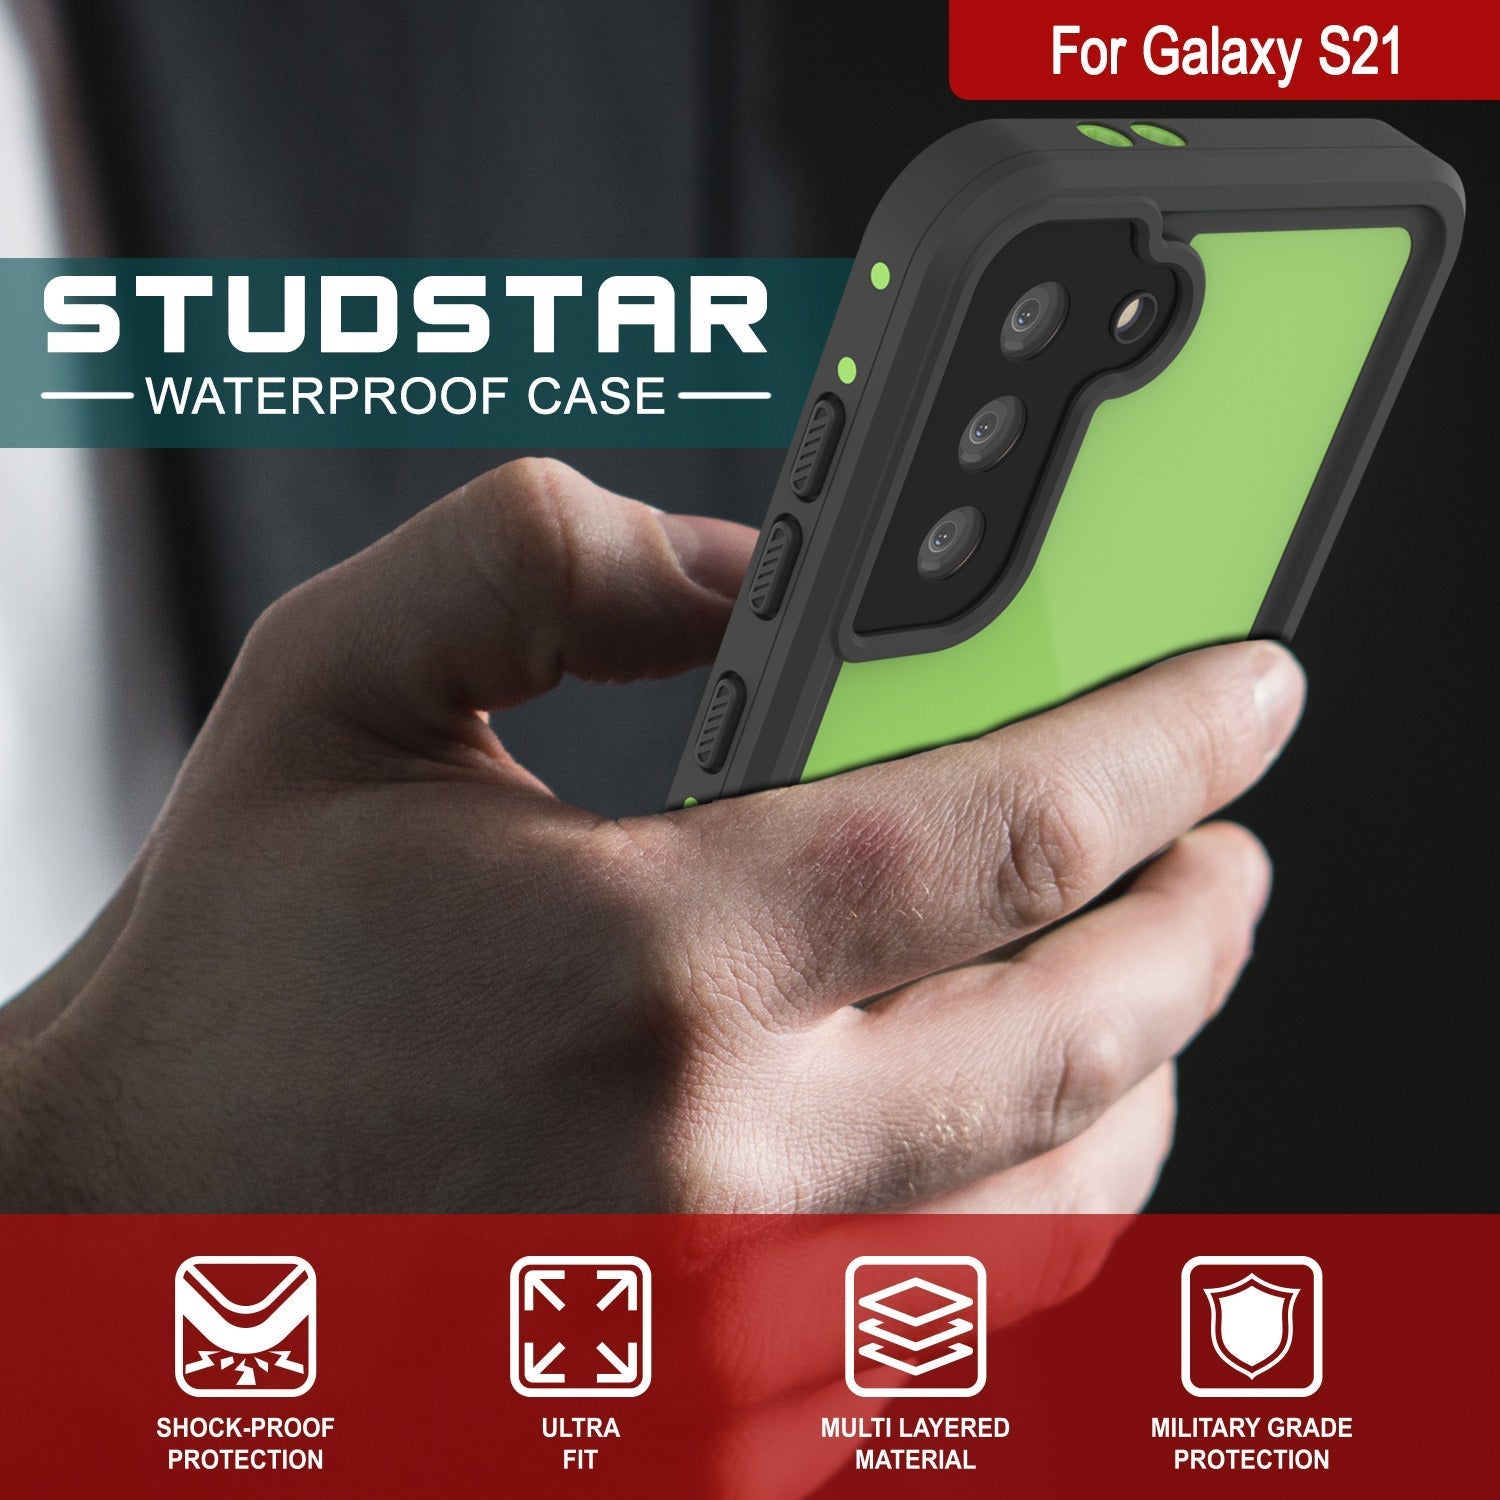 Galaxy S22 Waterproof Case PunkCase StudStar Light Green Thin 6.6ft Underwater IP68 ShockProof